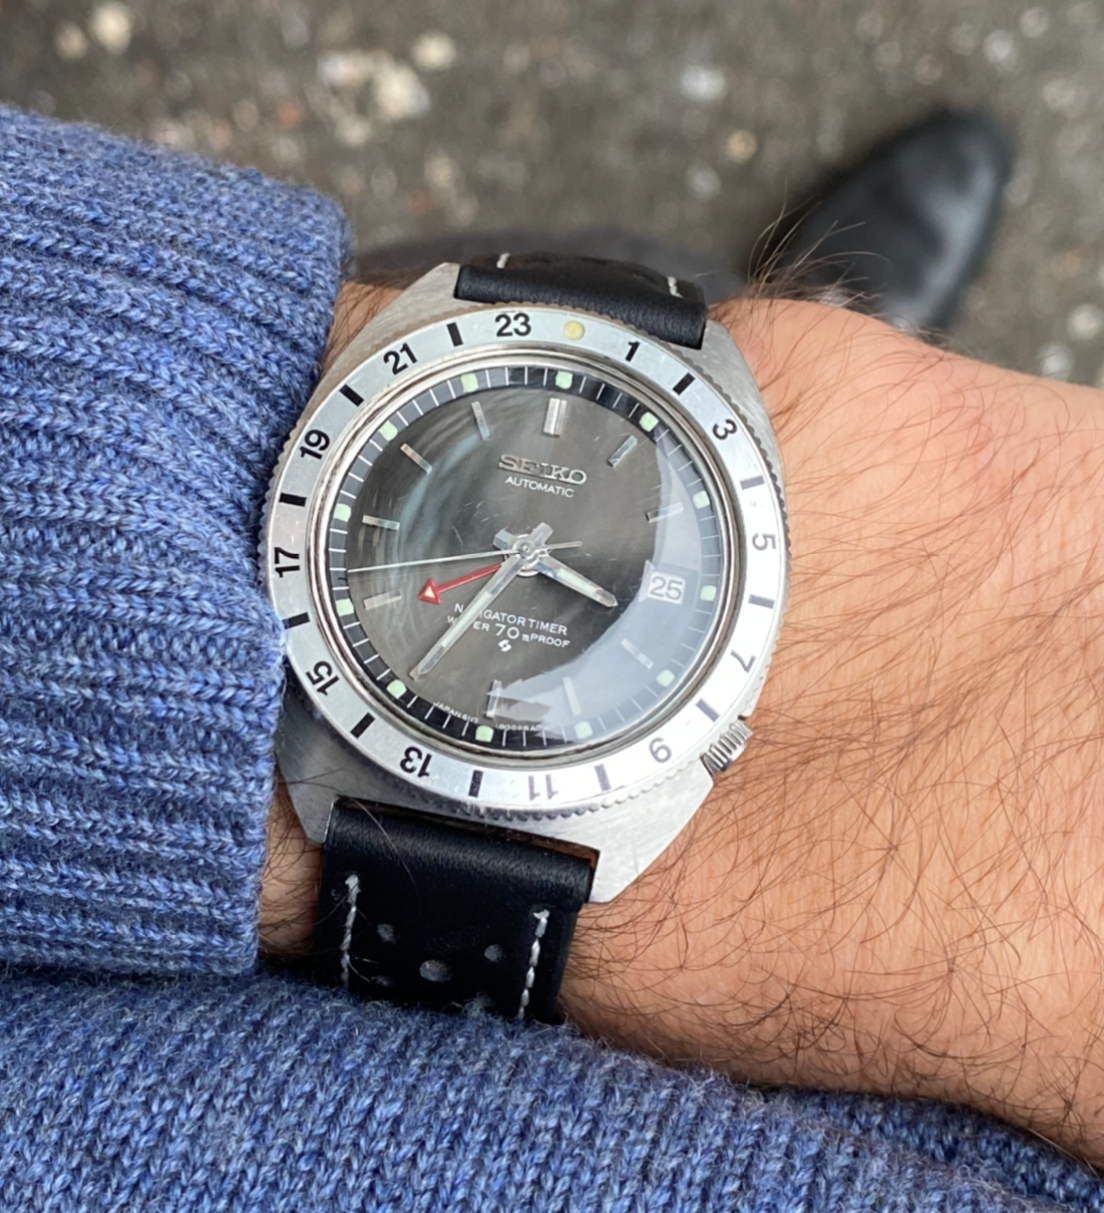 Seiko Navigator Timer - Bracelet options? | The Watch Site